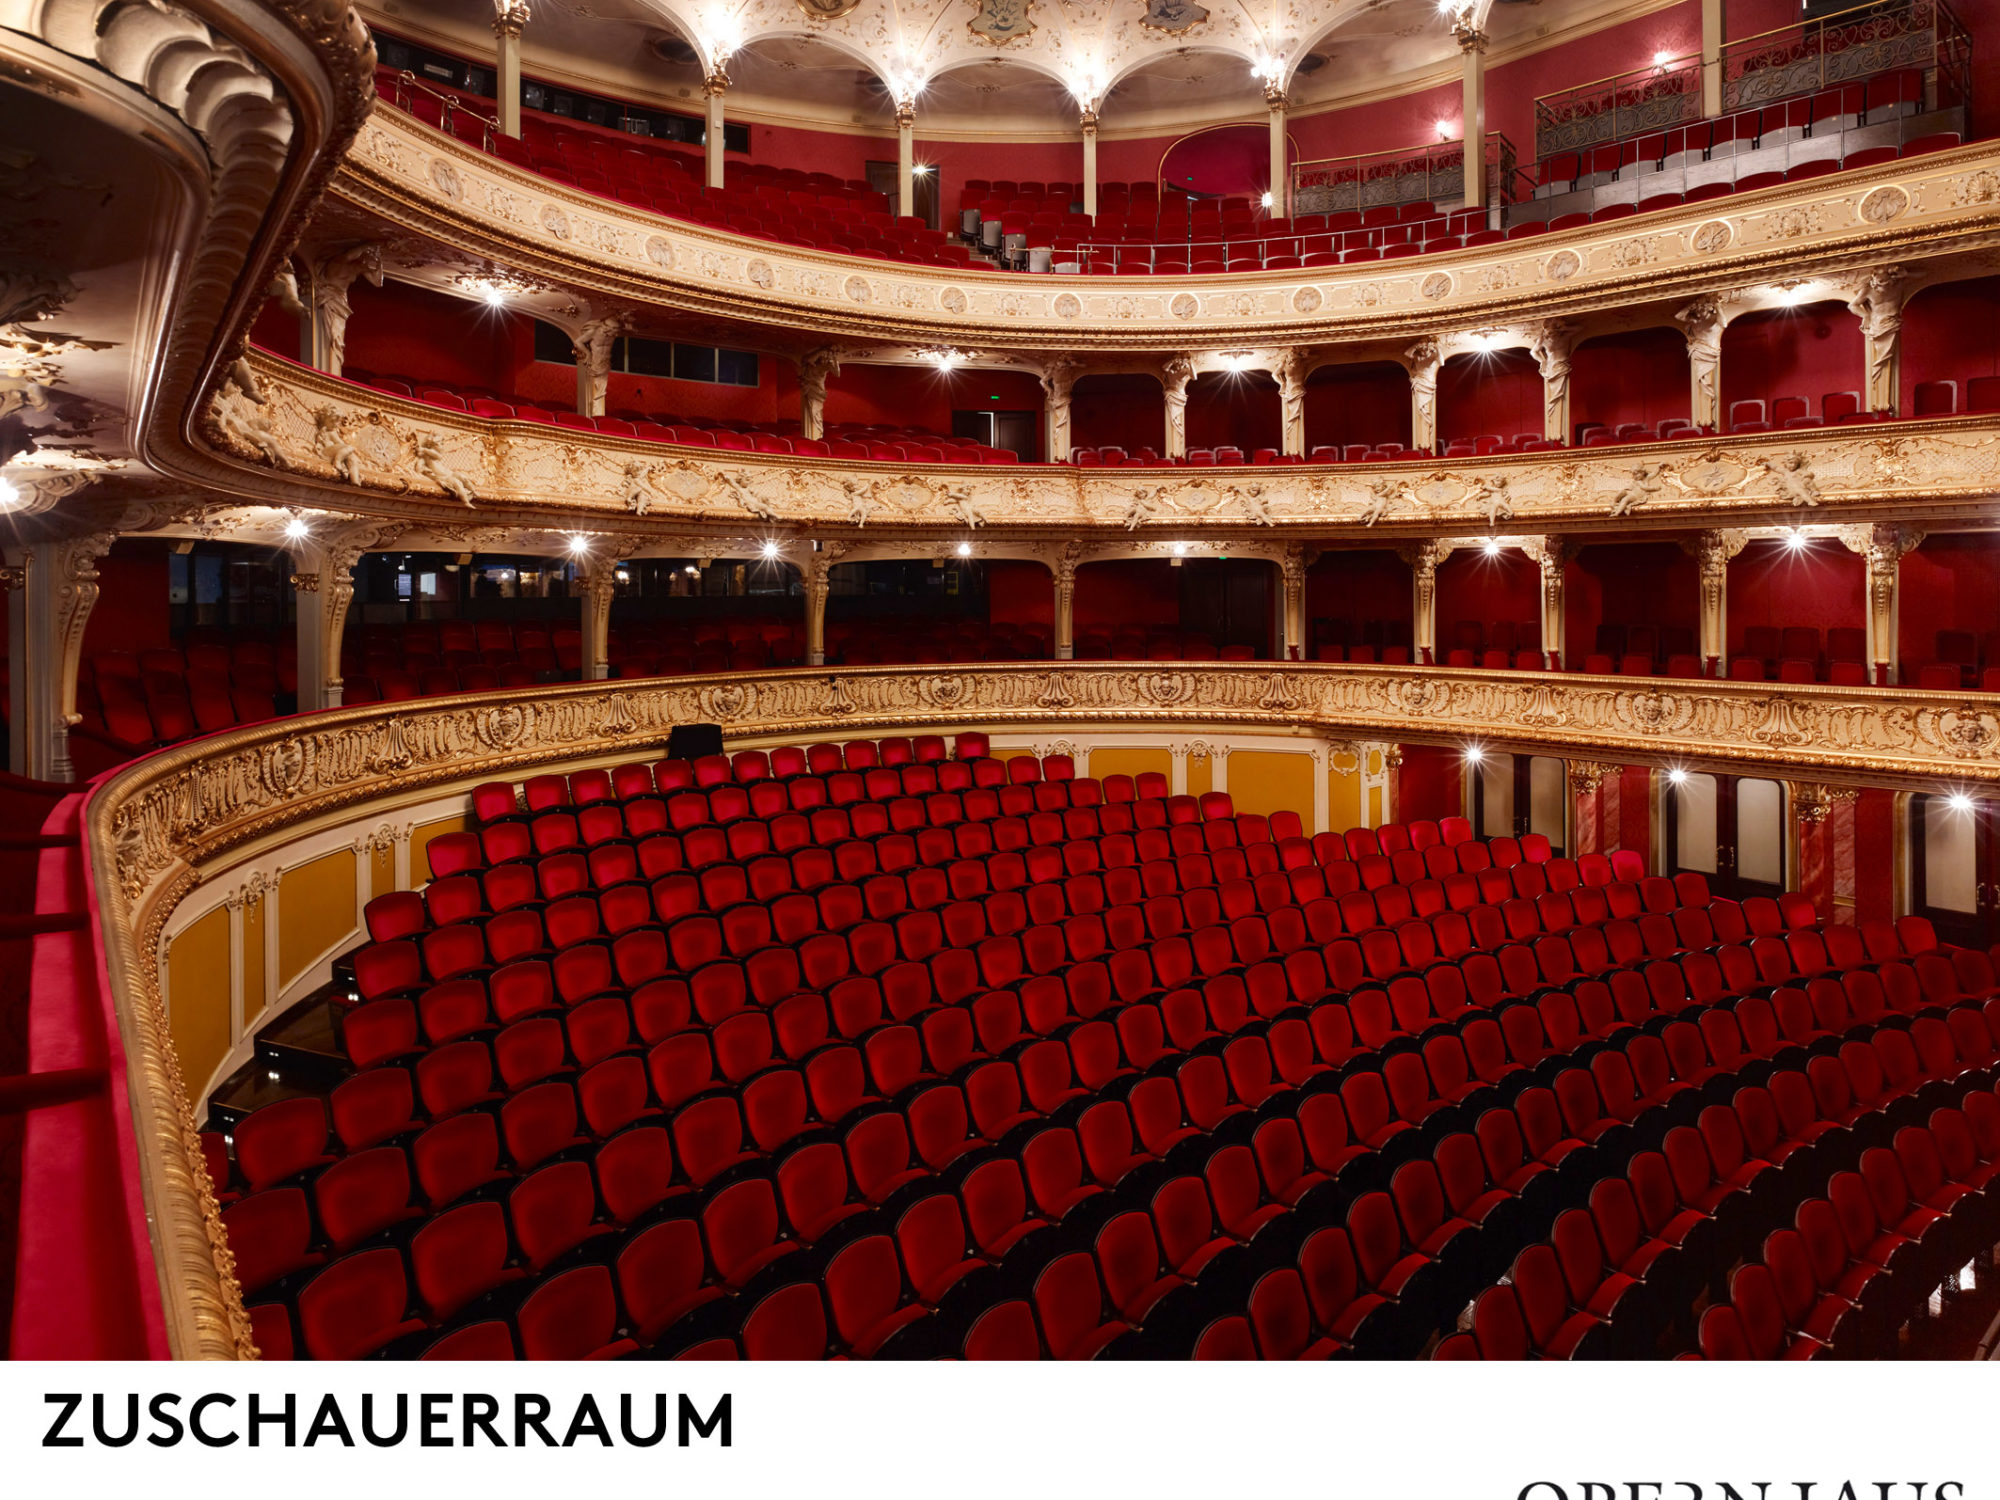 Opernhaus Zürich/Zuschauerraum/ Foto @ Dominic Büttner